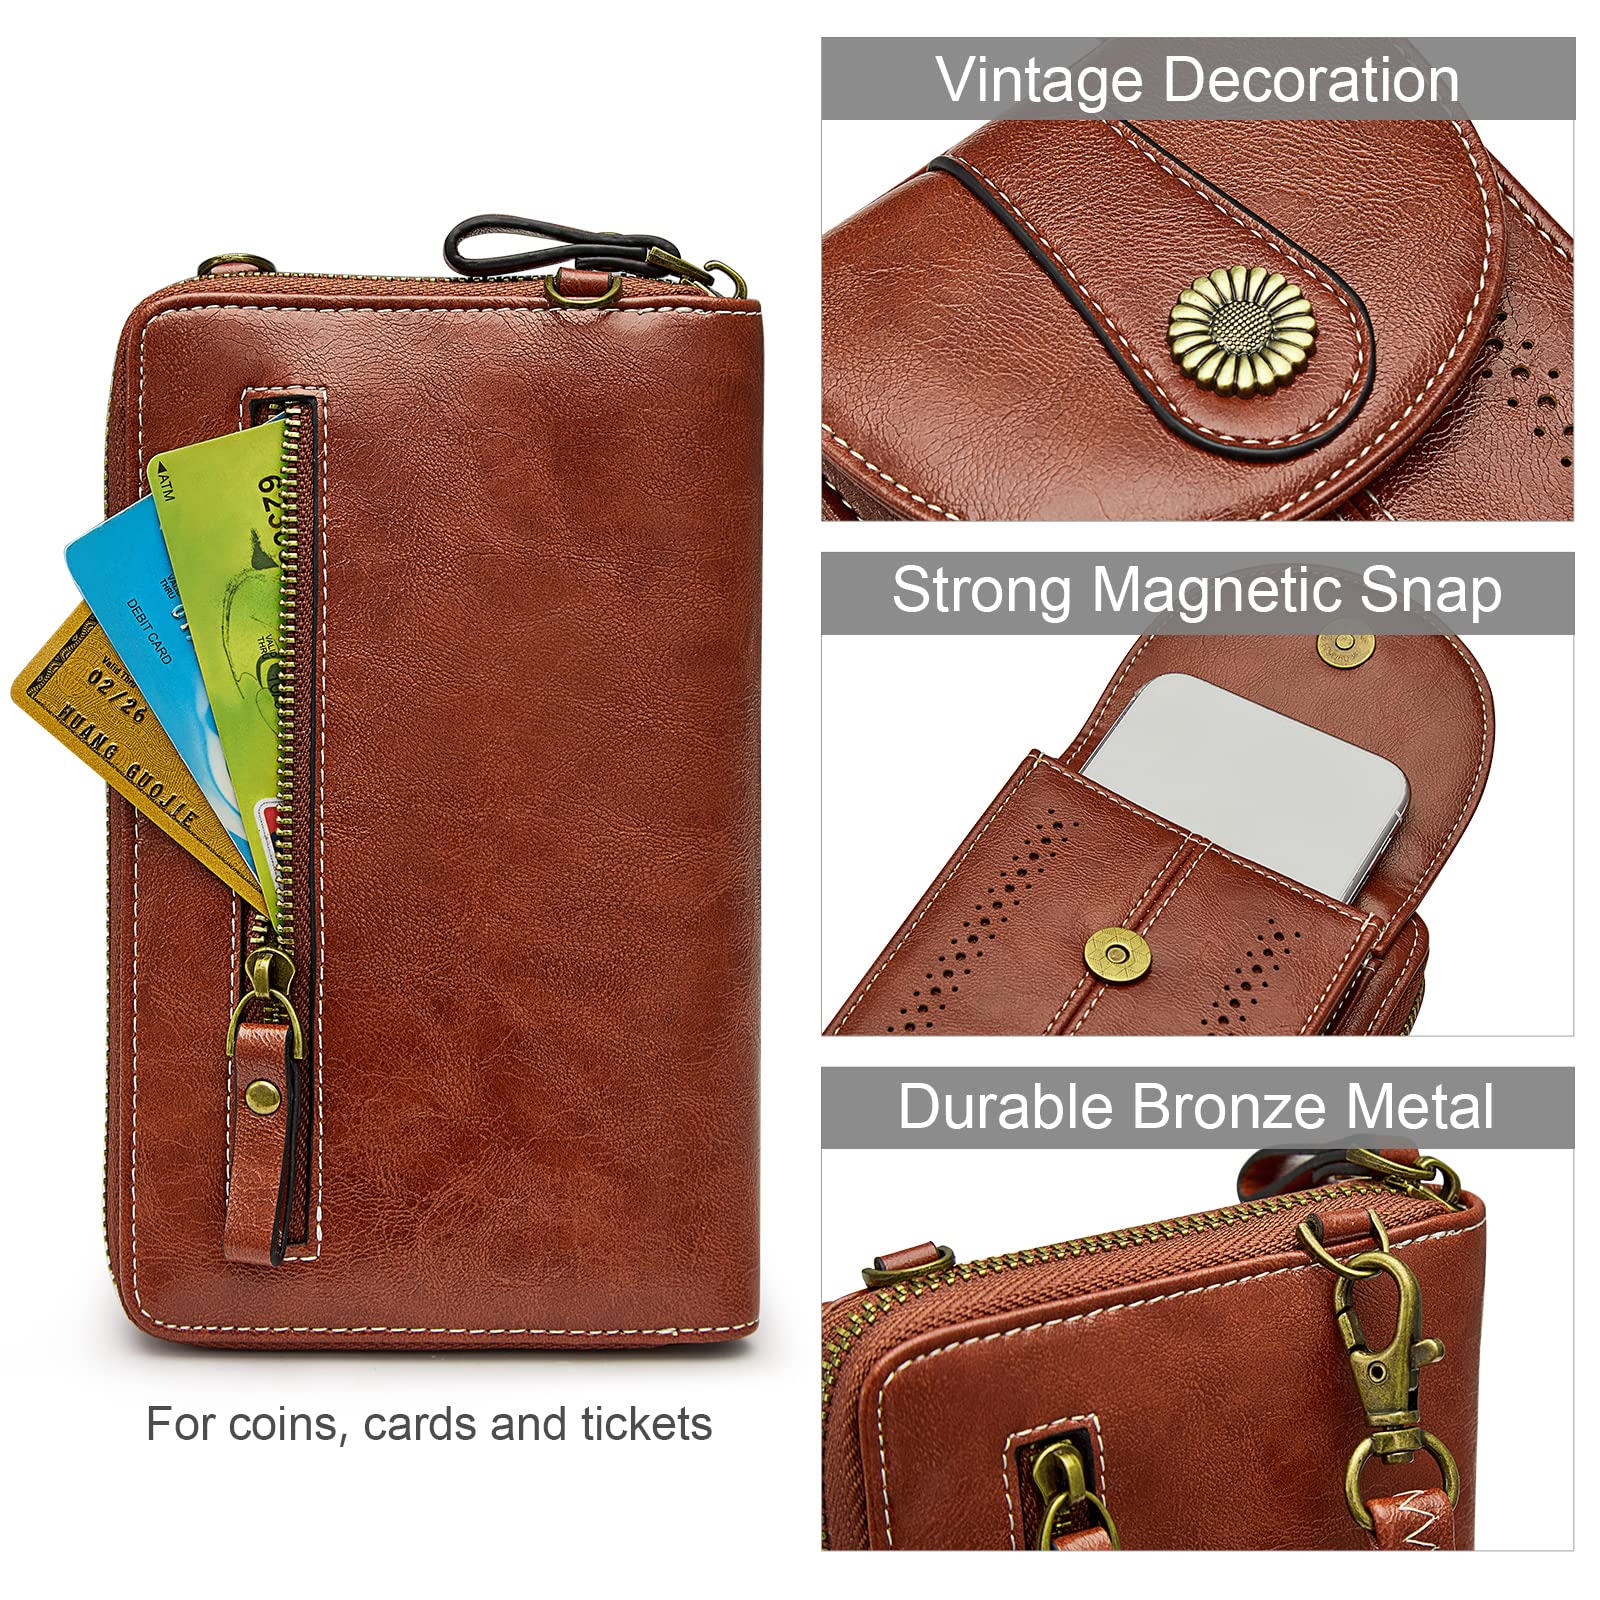 Check Out the Microscopic Handbag 